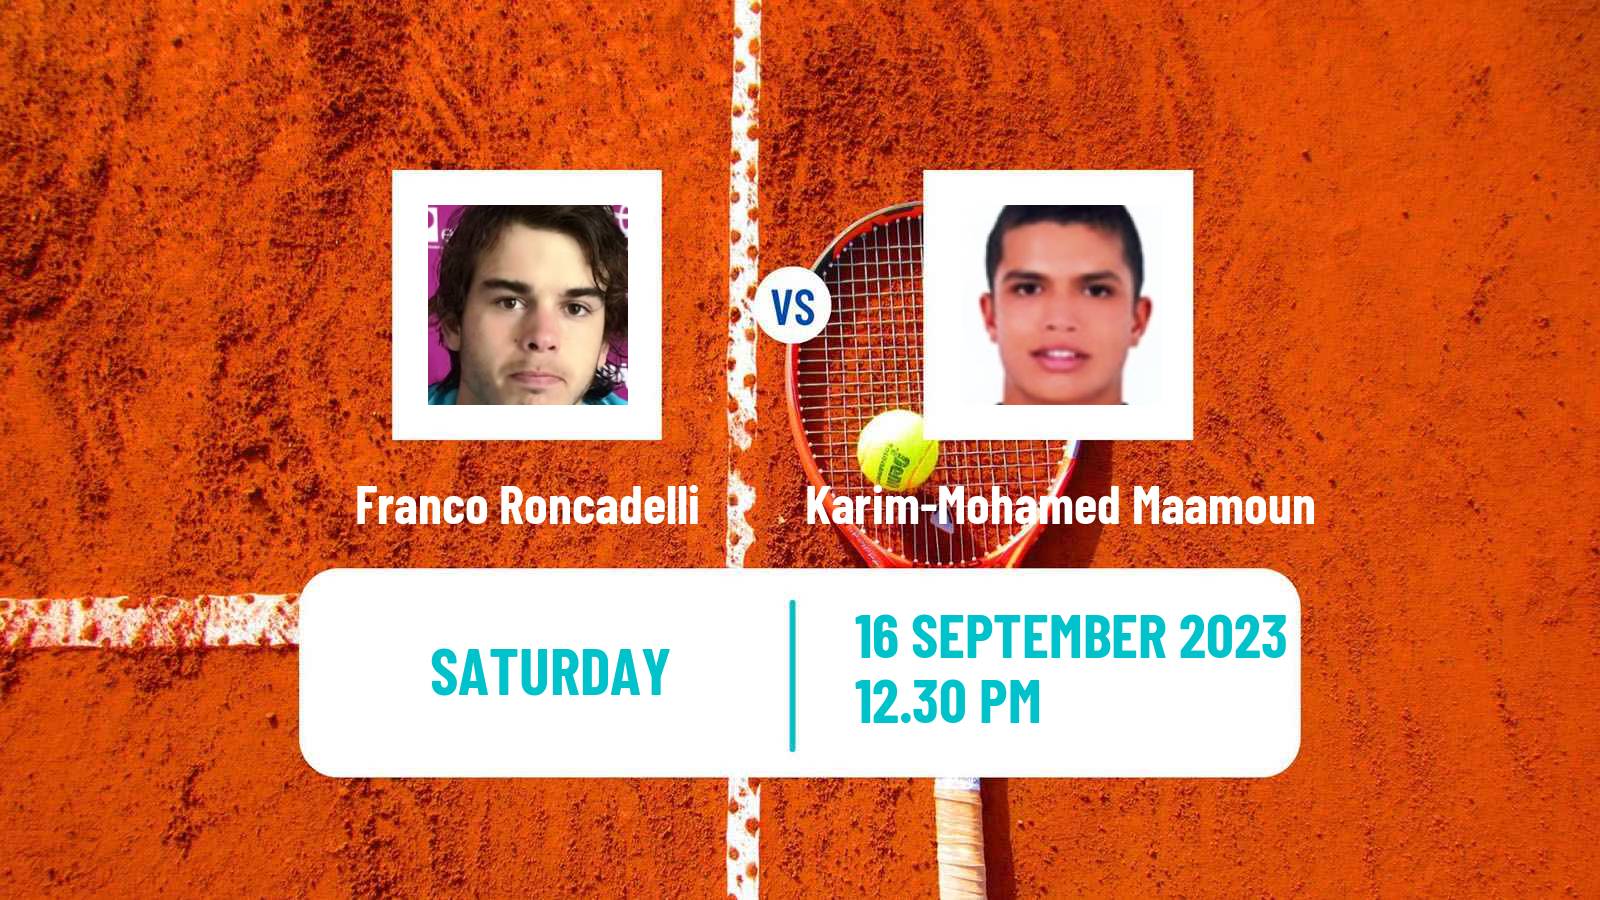 Tennis Davis Cup World Group II Franco Roncadelli - Karim-Mohamed Maamoun